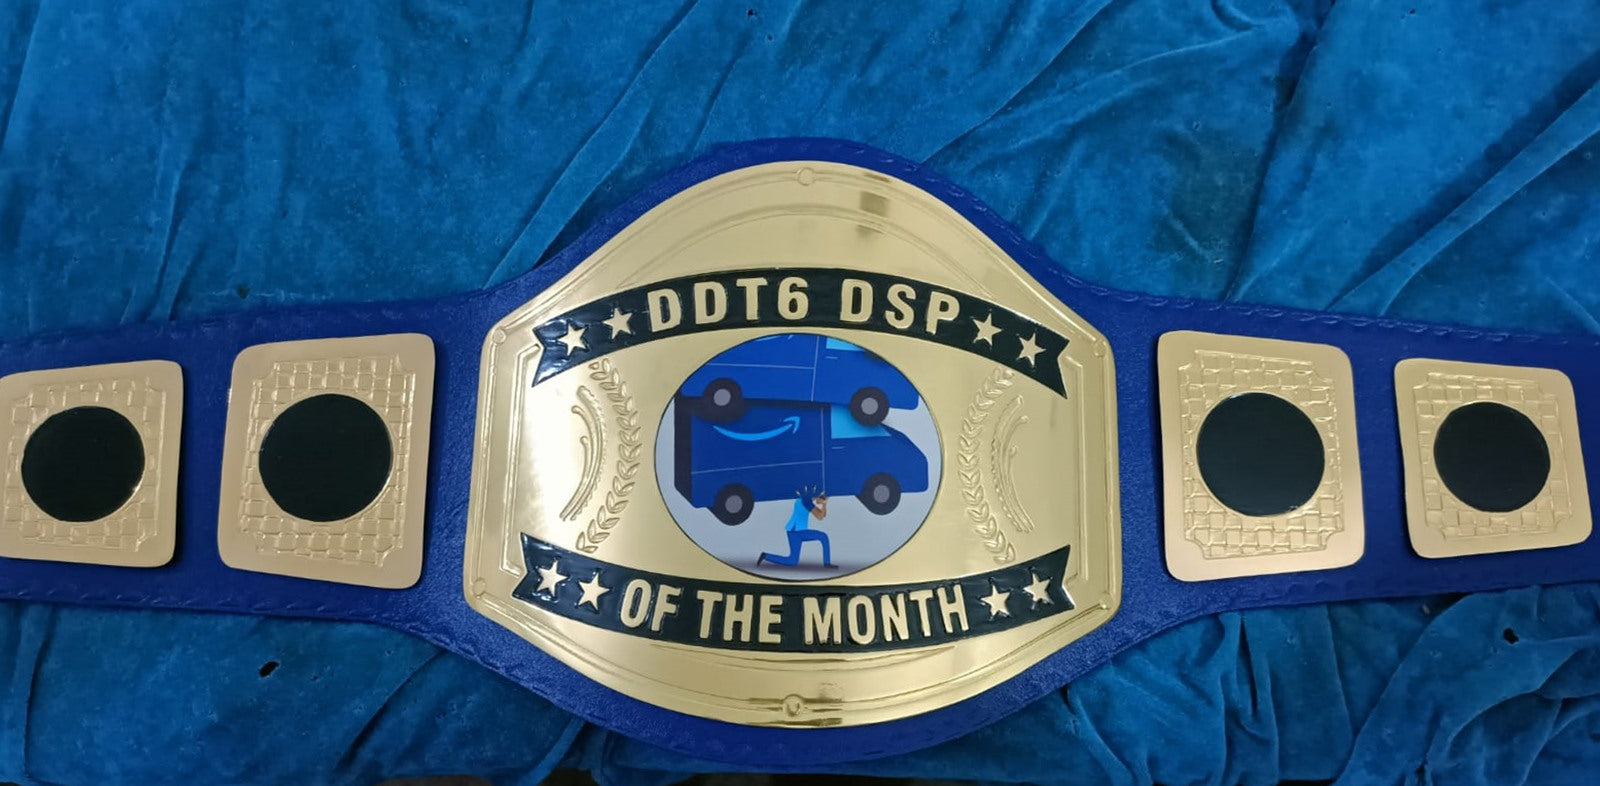 Custom Name and Shipping Truck Logo Wrestling Championship Belt - Customize Wrestling Belts